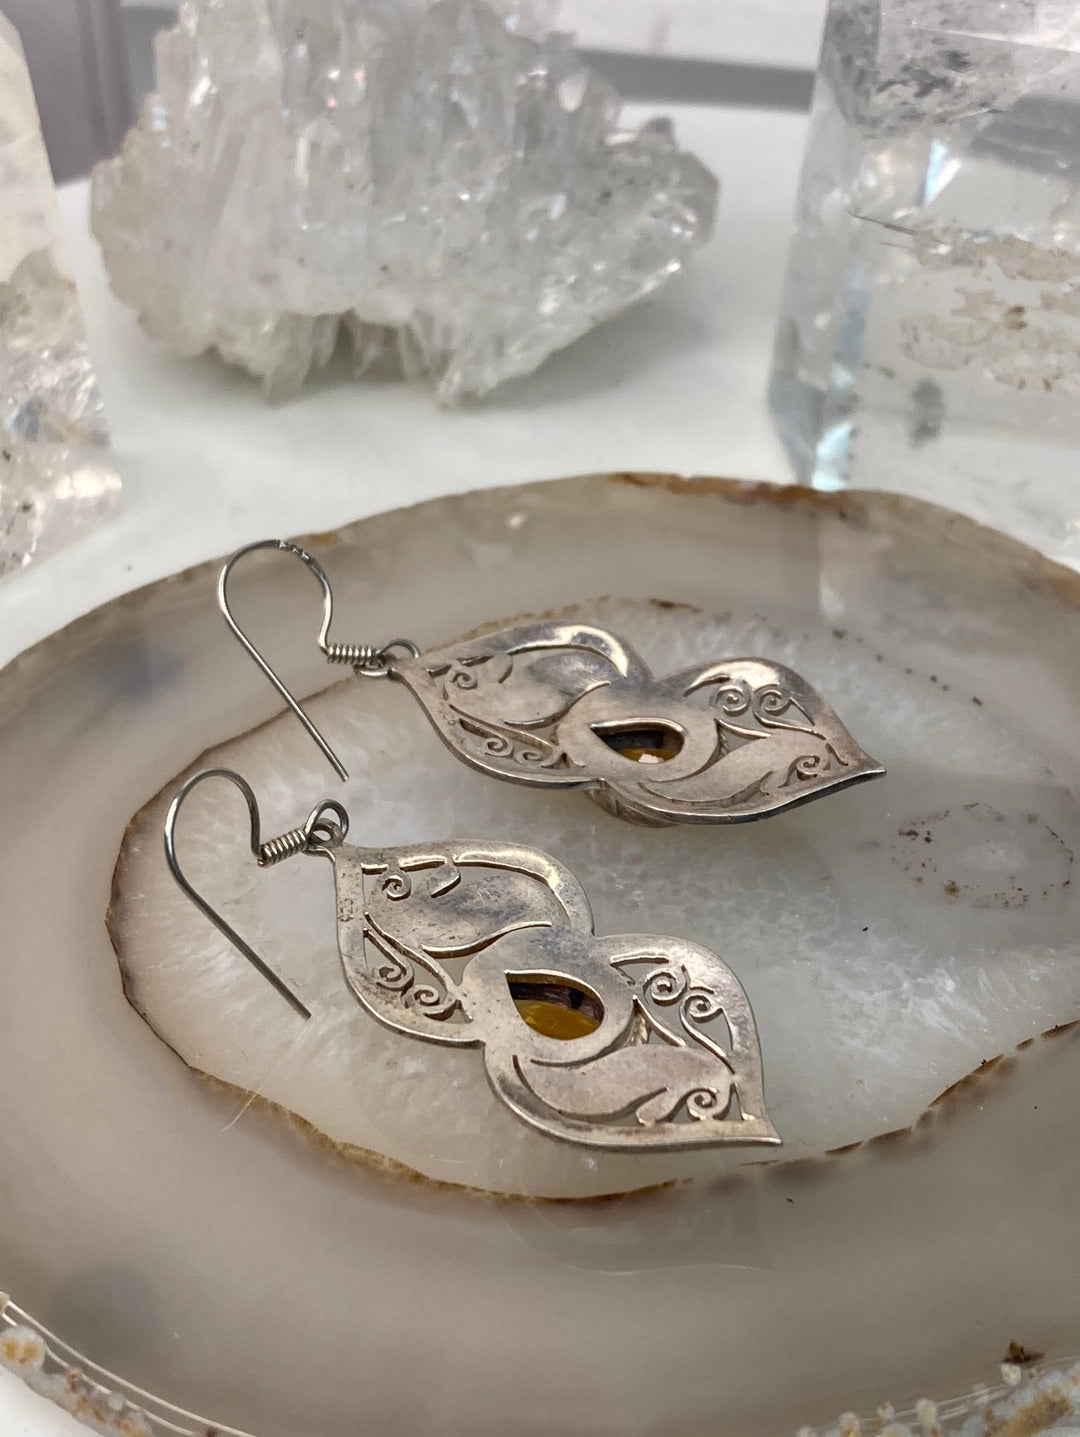 Sterling silver citrine earrings